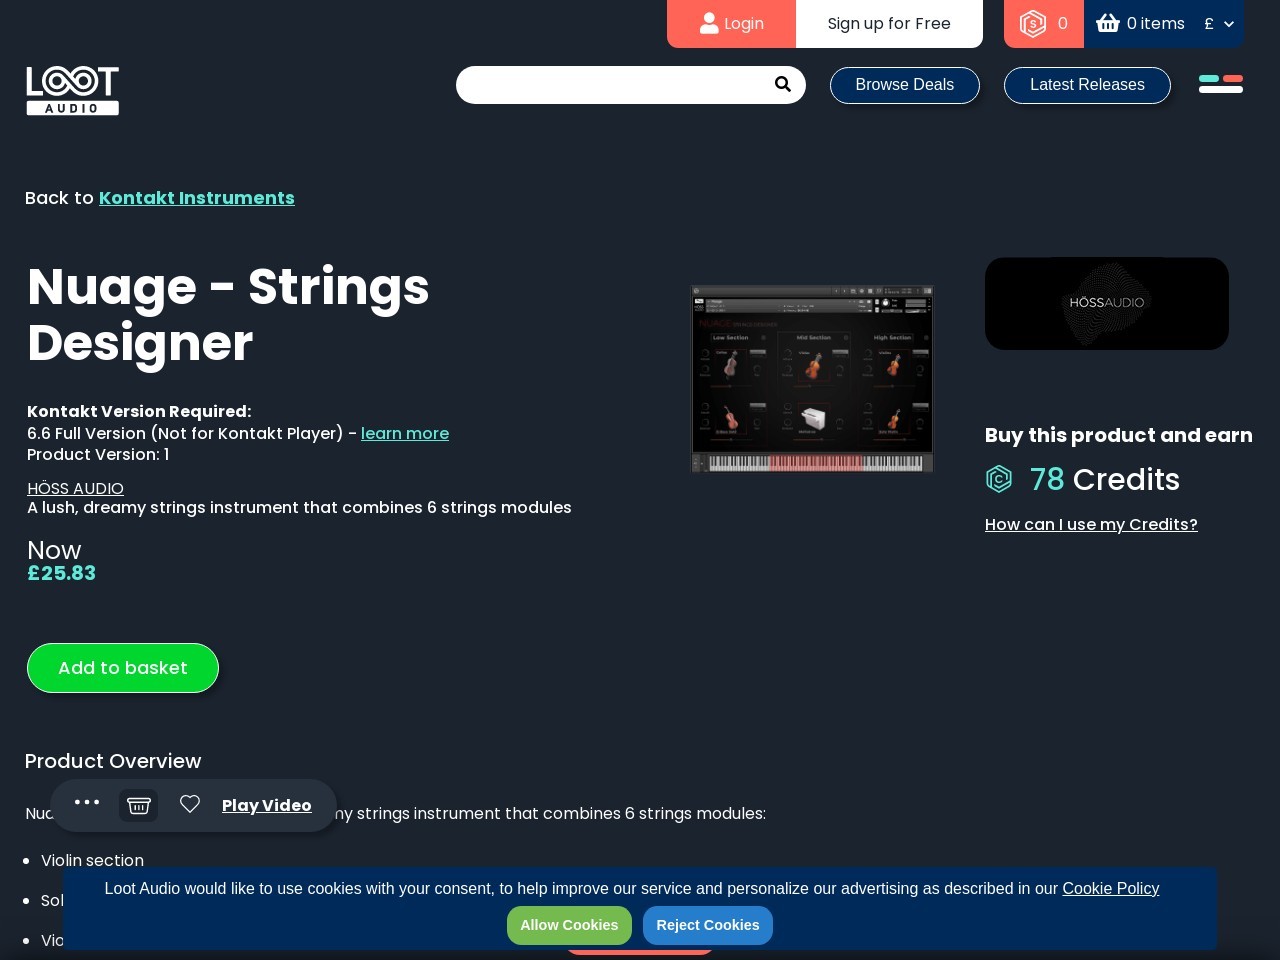 Nuage - Strings Designer | Kontakt | Loot Audio